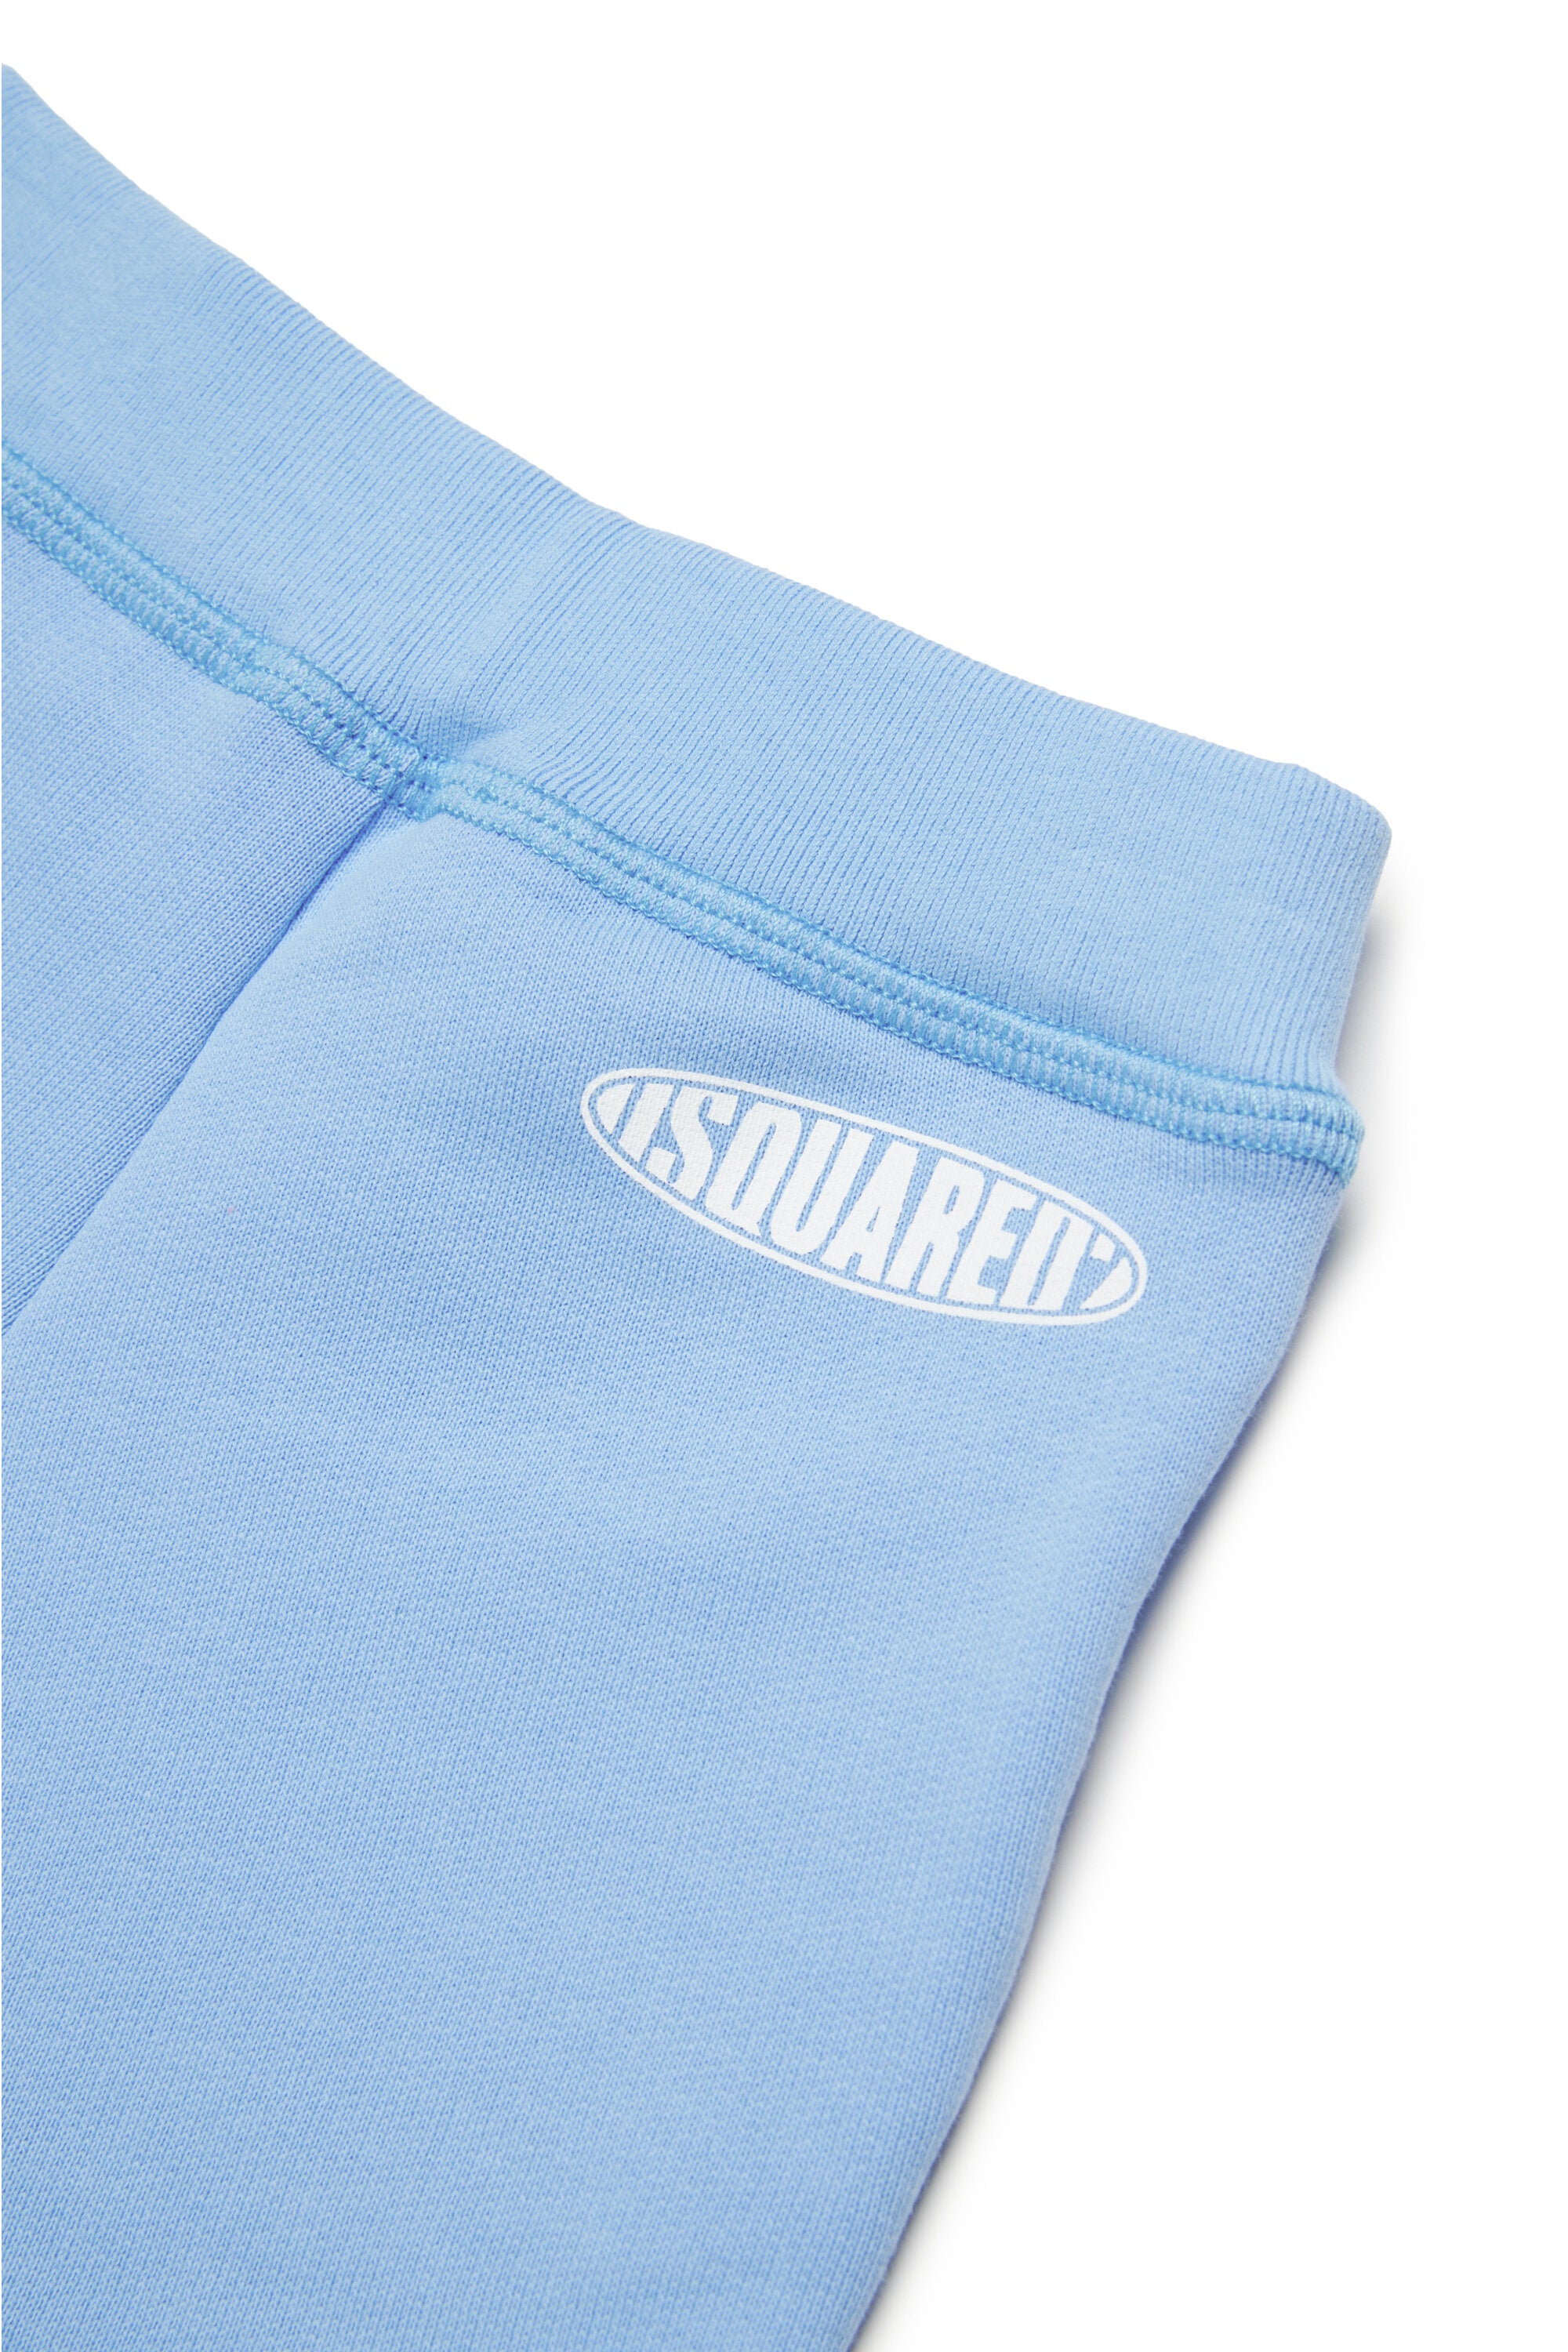 Fleece shorts with surf logo